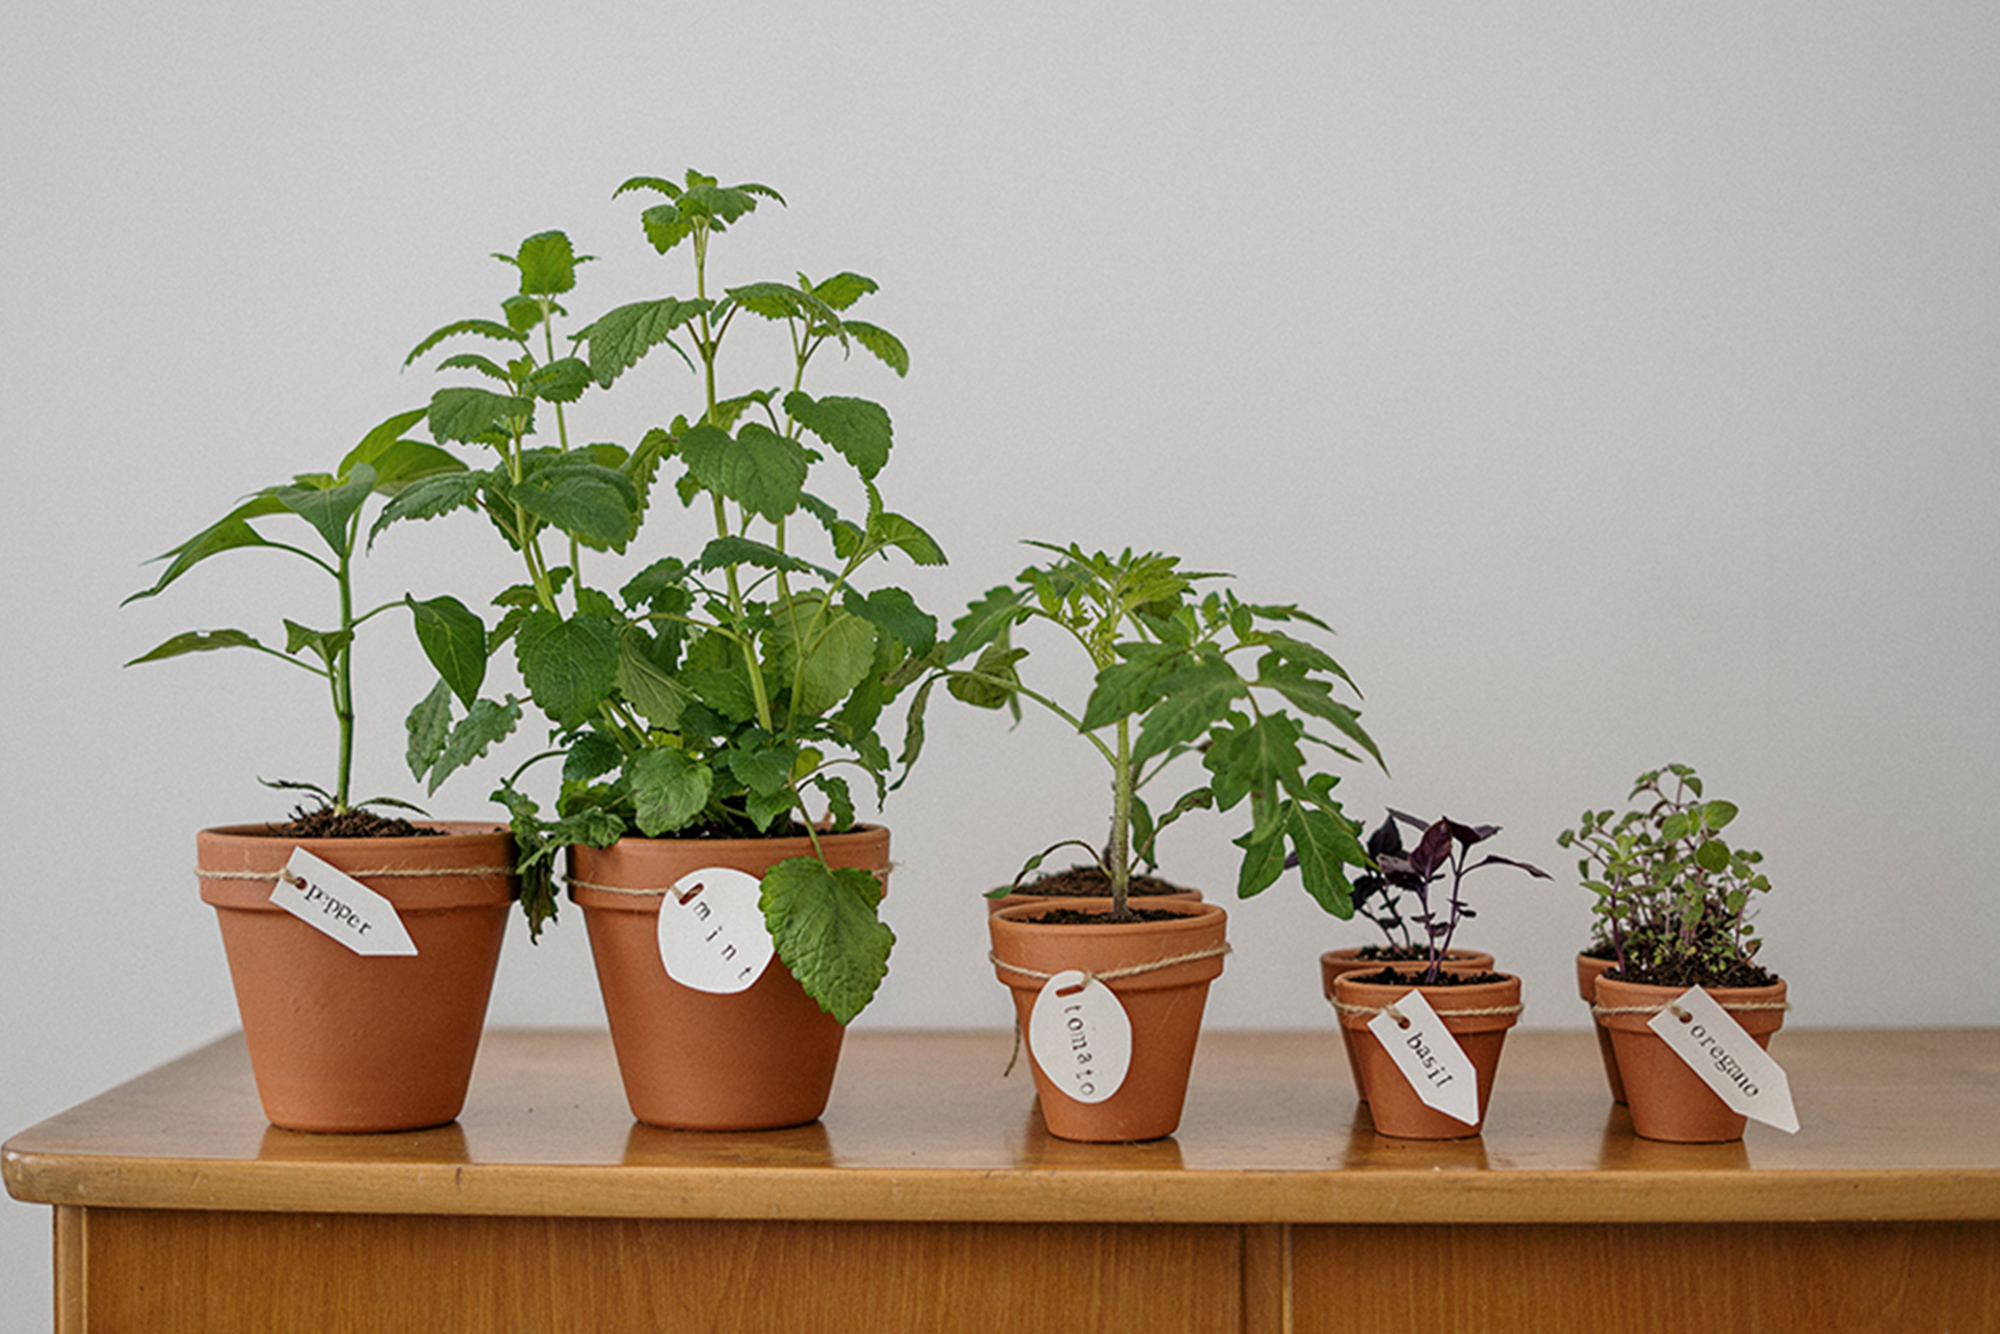 Five steps to start an indoor herb garden